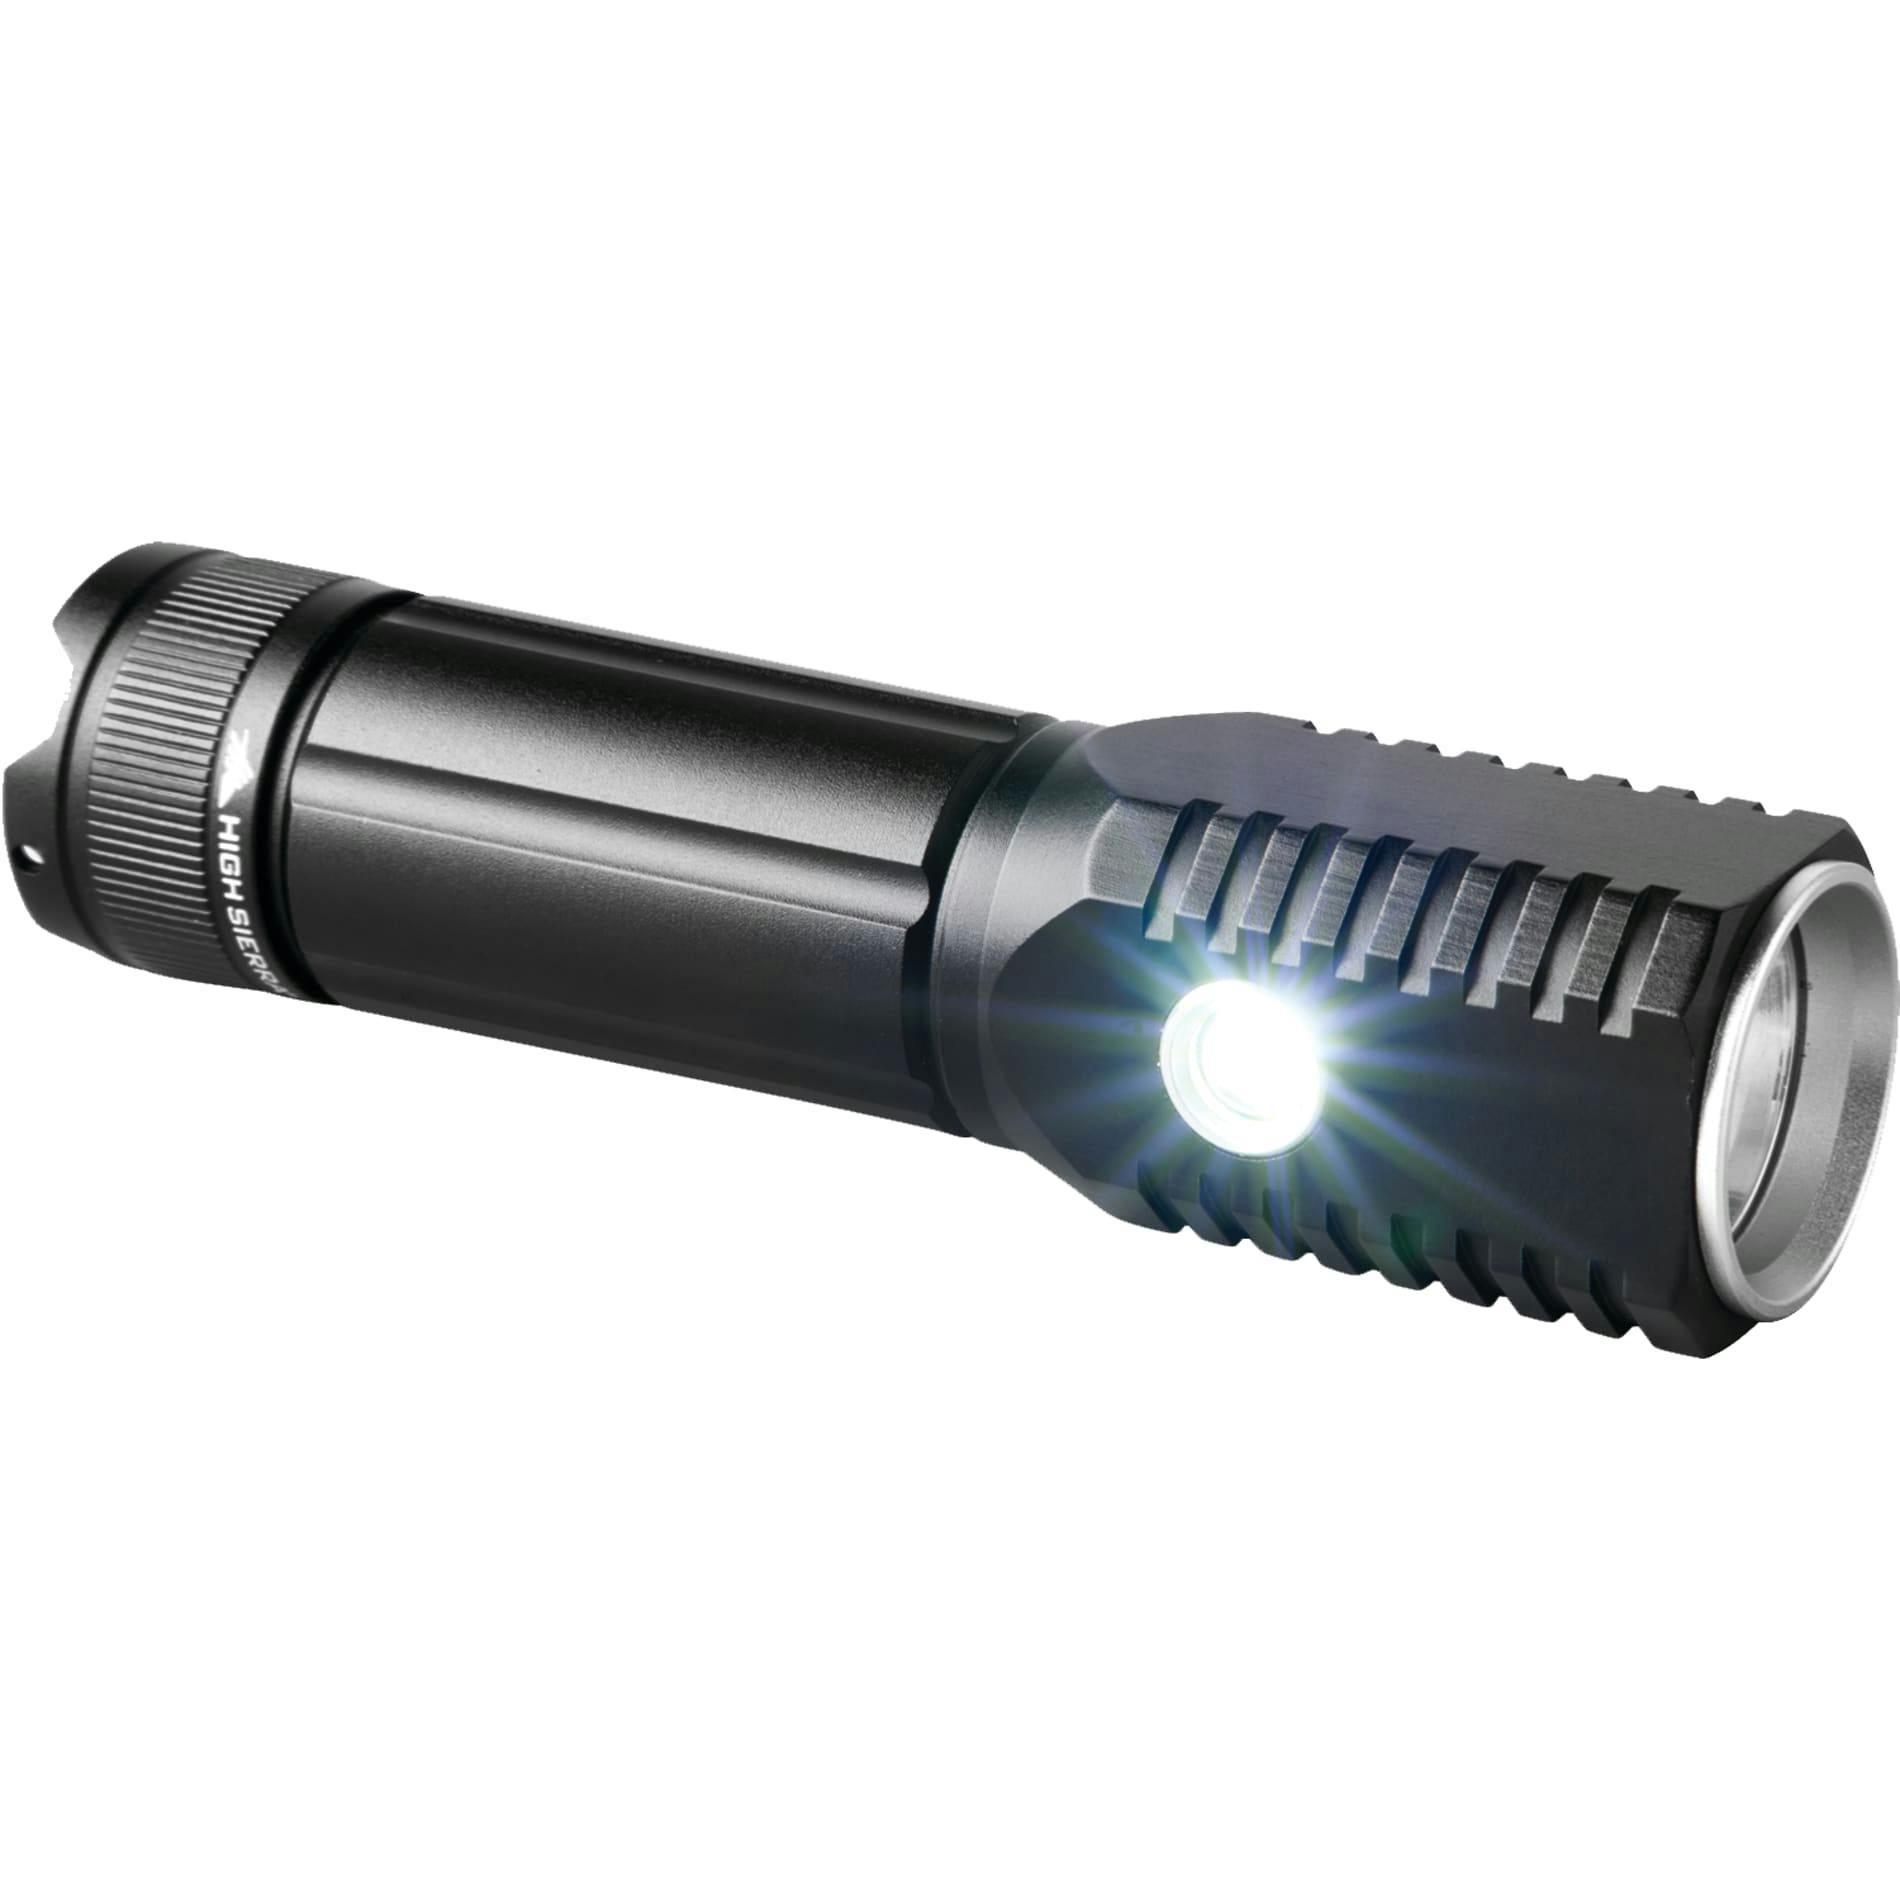 High Sierra® 3W CREE XPE LED Flashlight - additional Image 1